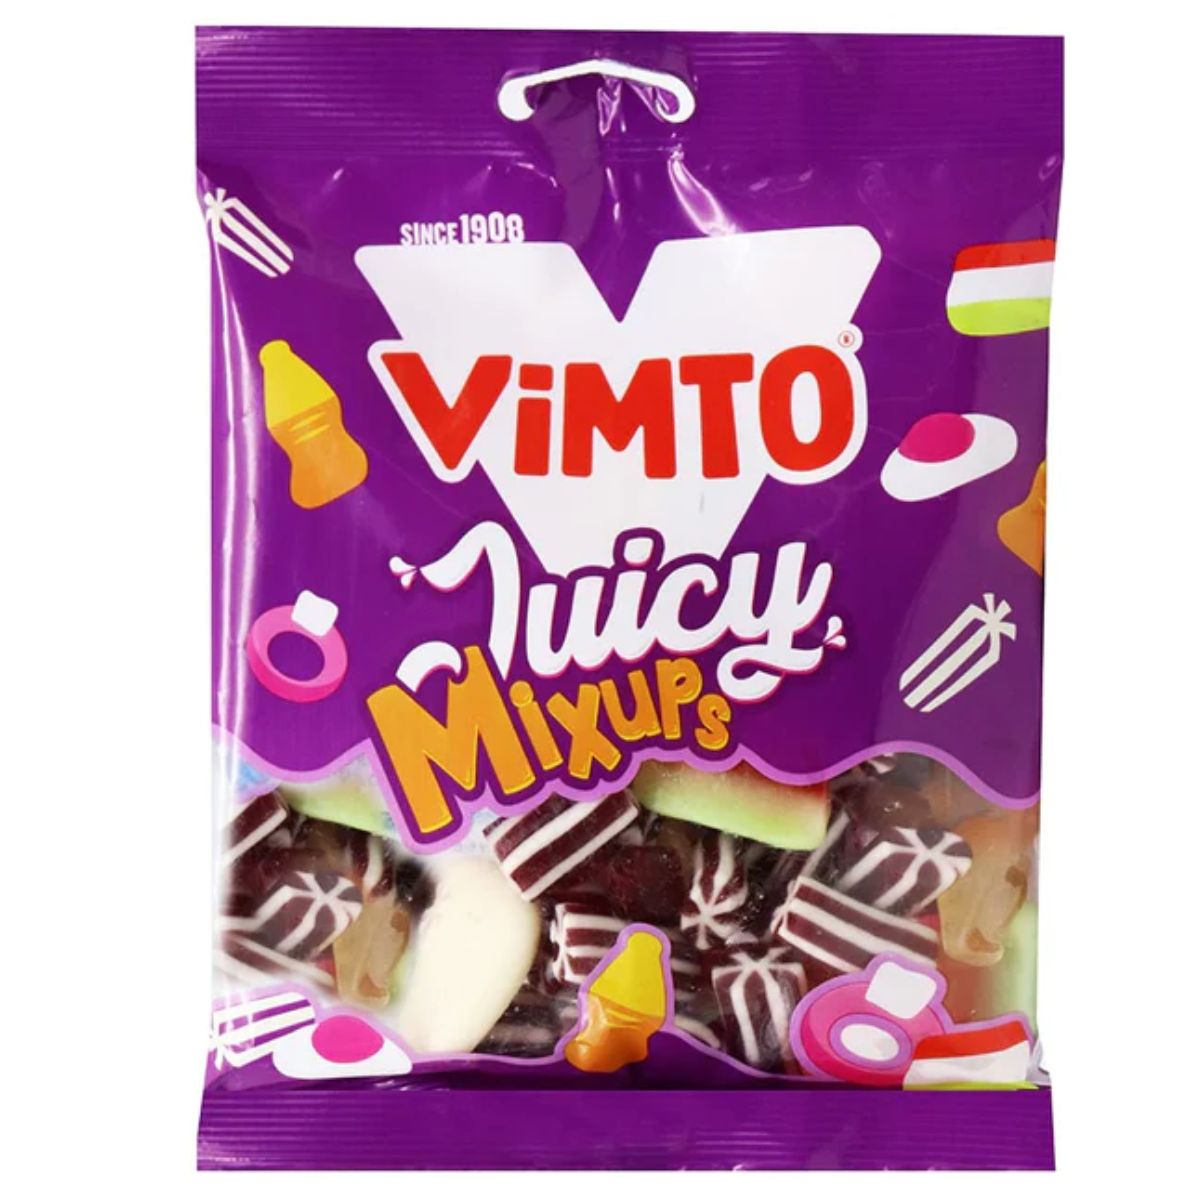 A purple bag of Vimto - Juicy Mix Ups Share Bag - 140g.